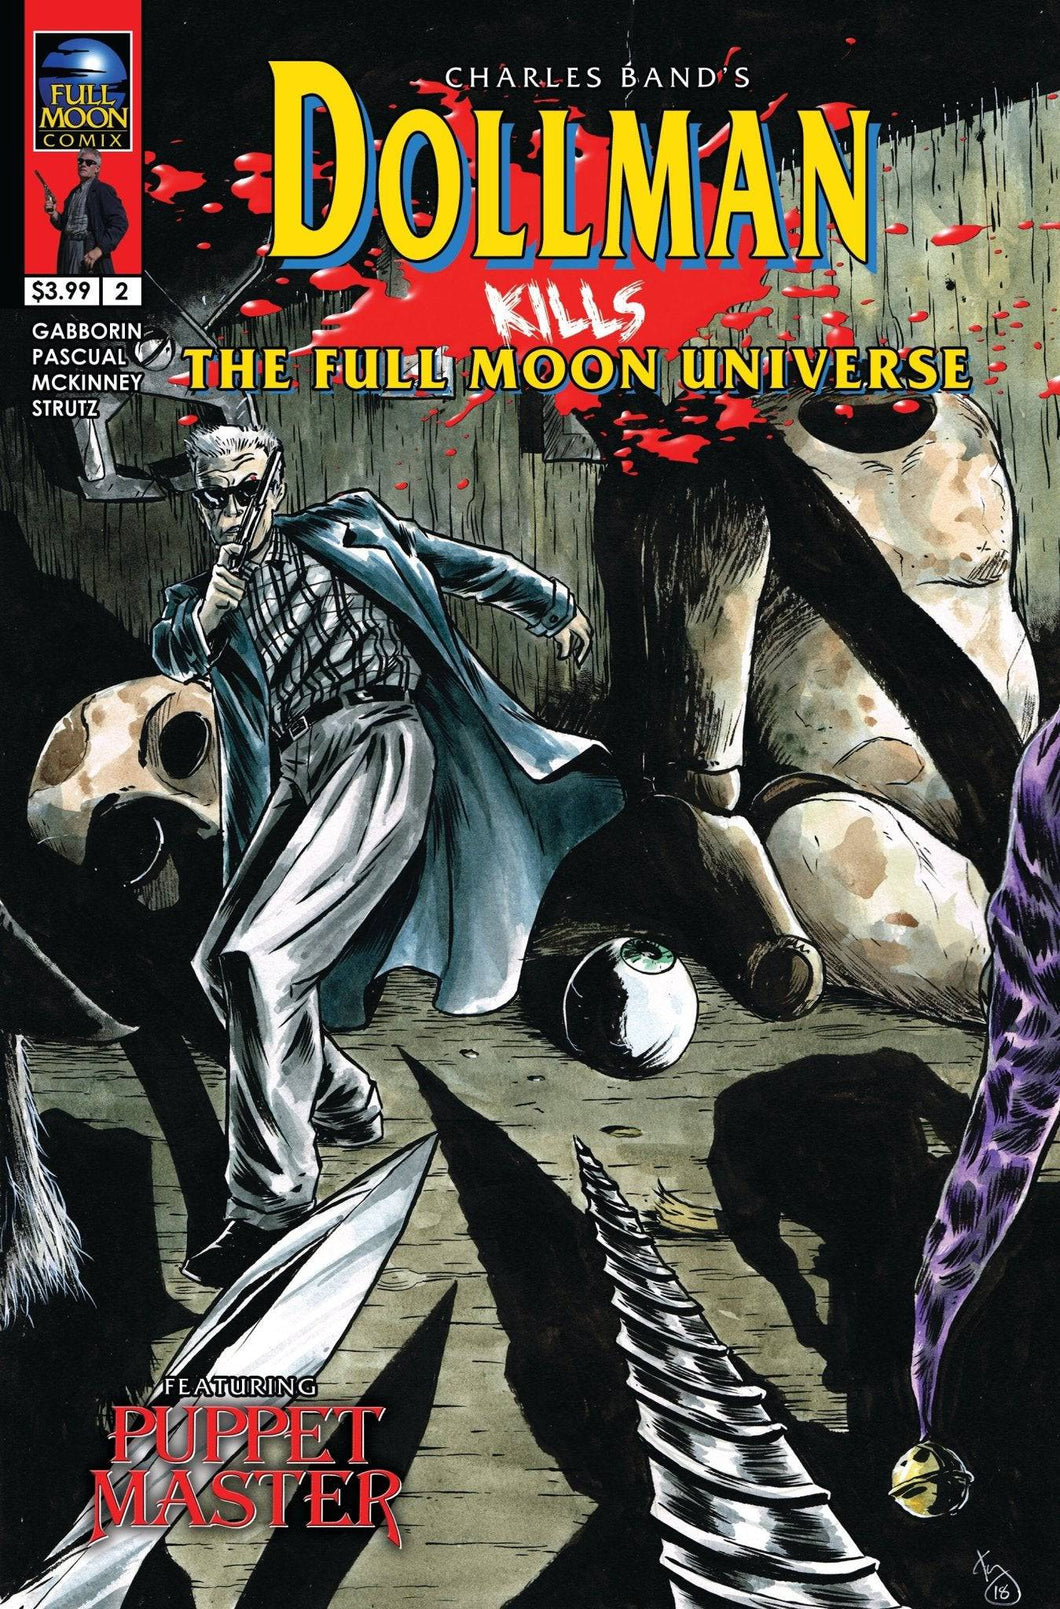 Dollman Kills The Full Moon Universe #2 (Kelly Williams cover)